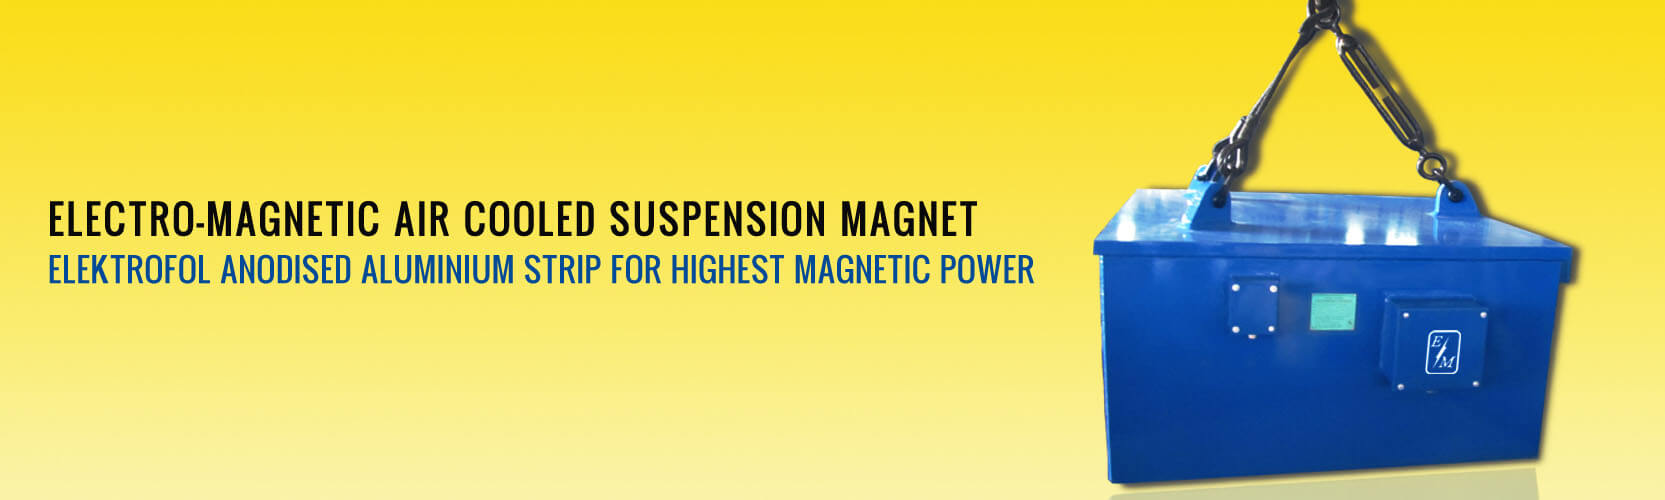 11.Suspension_Magnet_HDbanner_1665x500